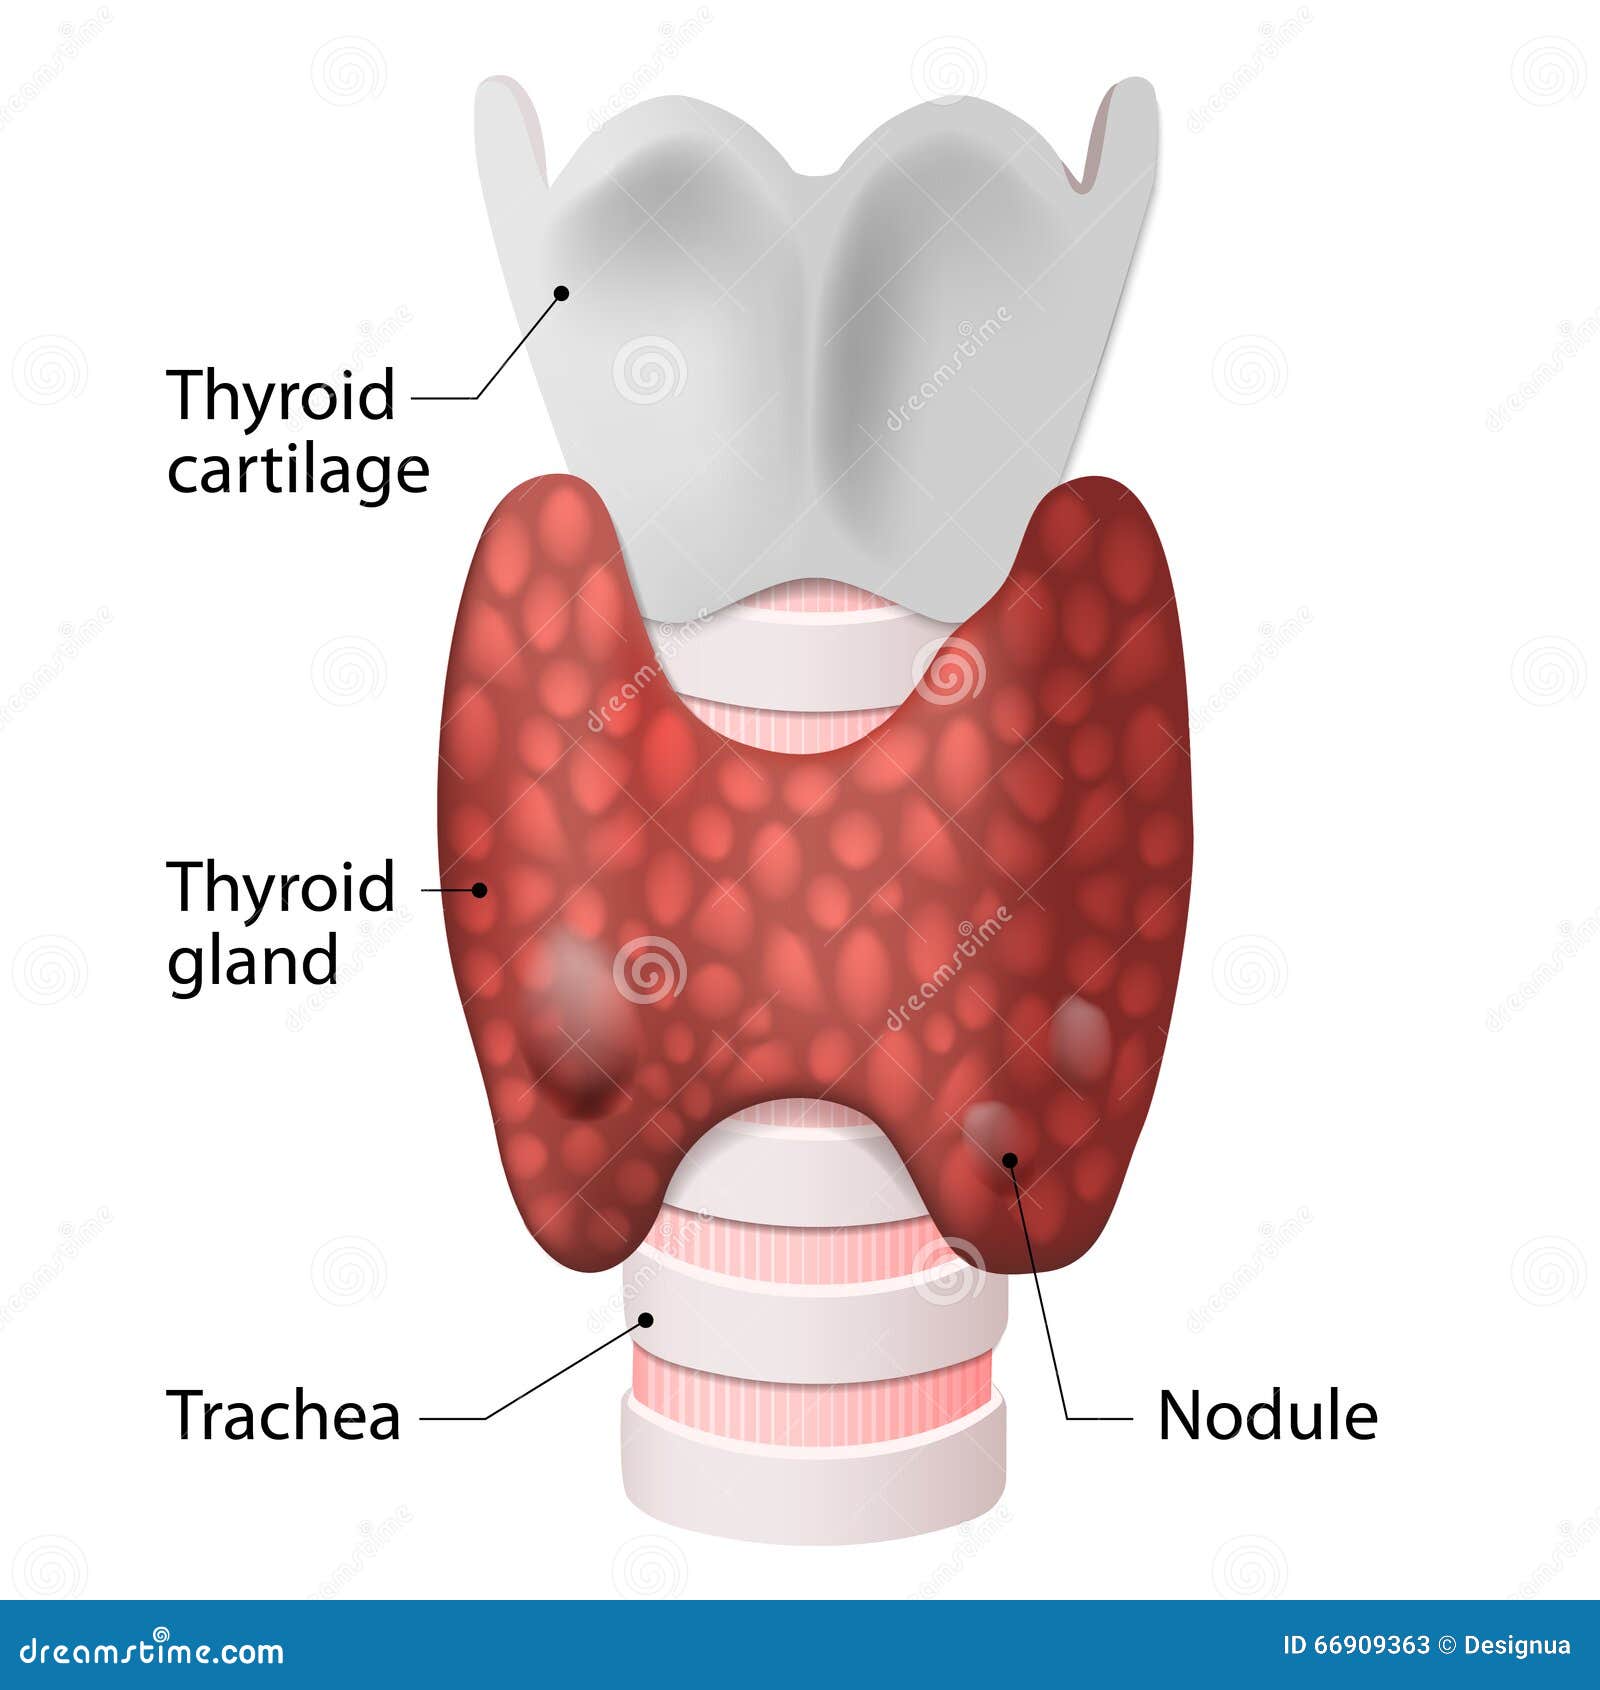 Goiter & Thyroid Nodules